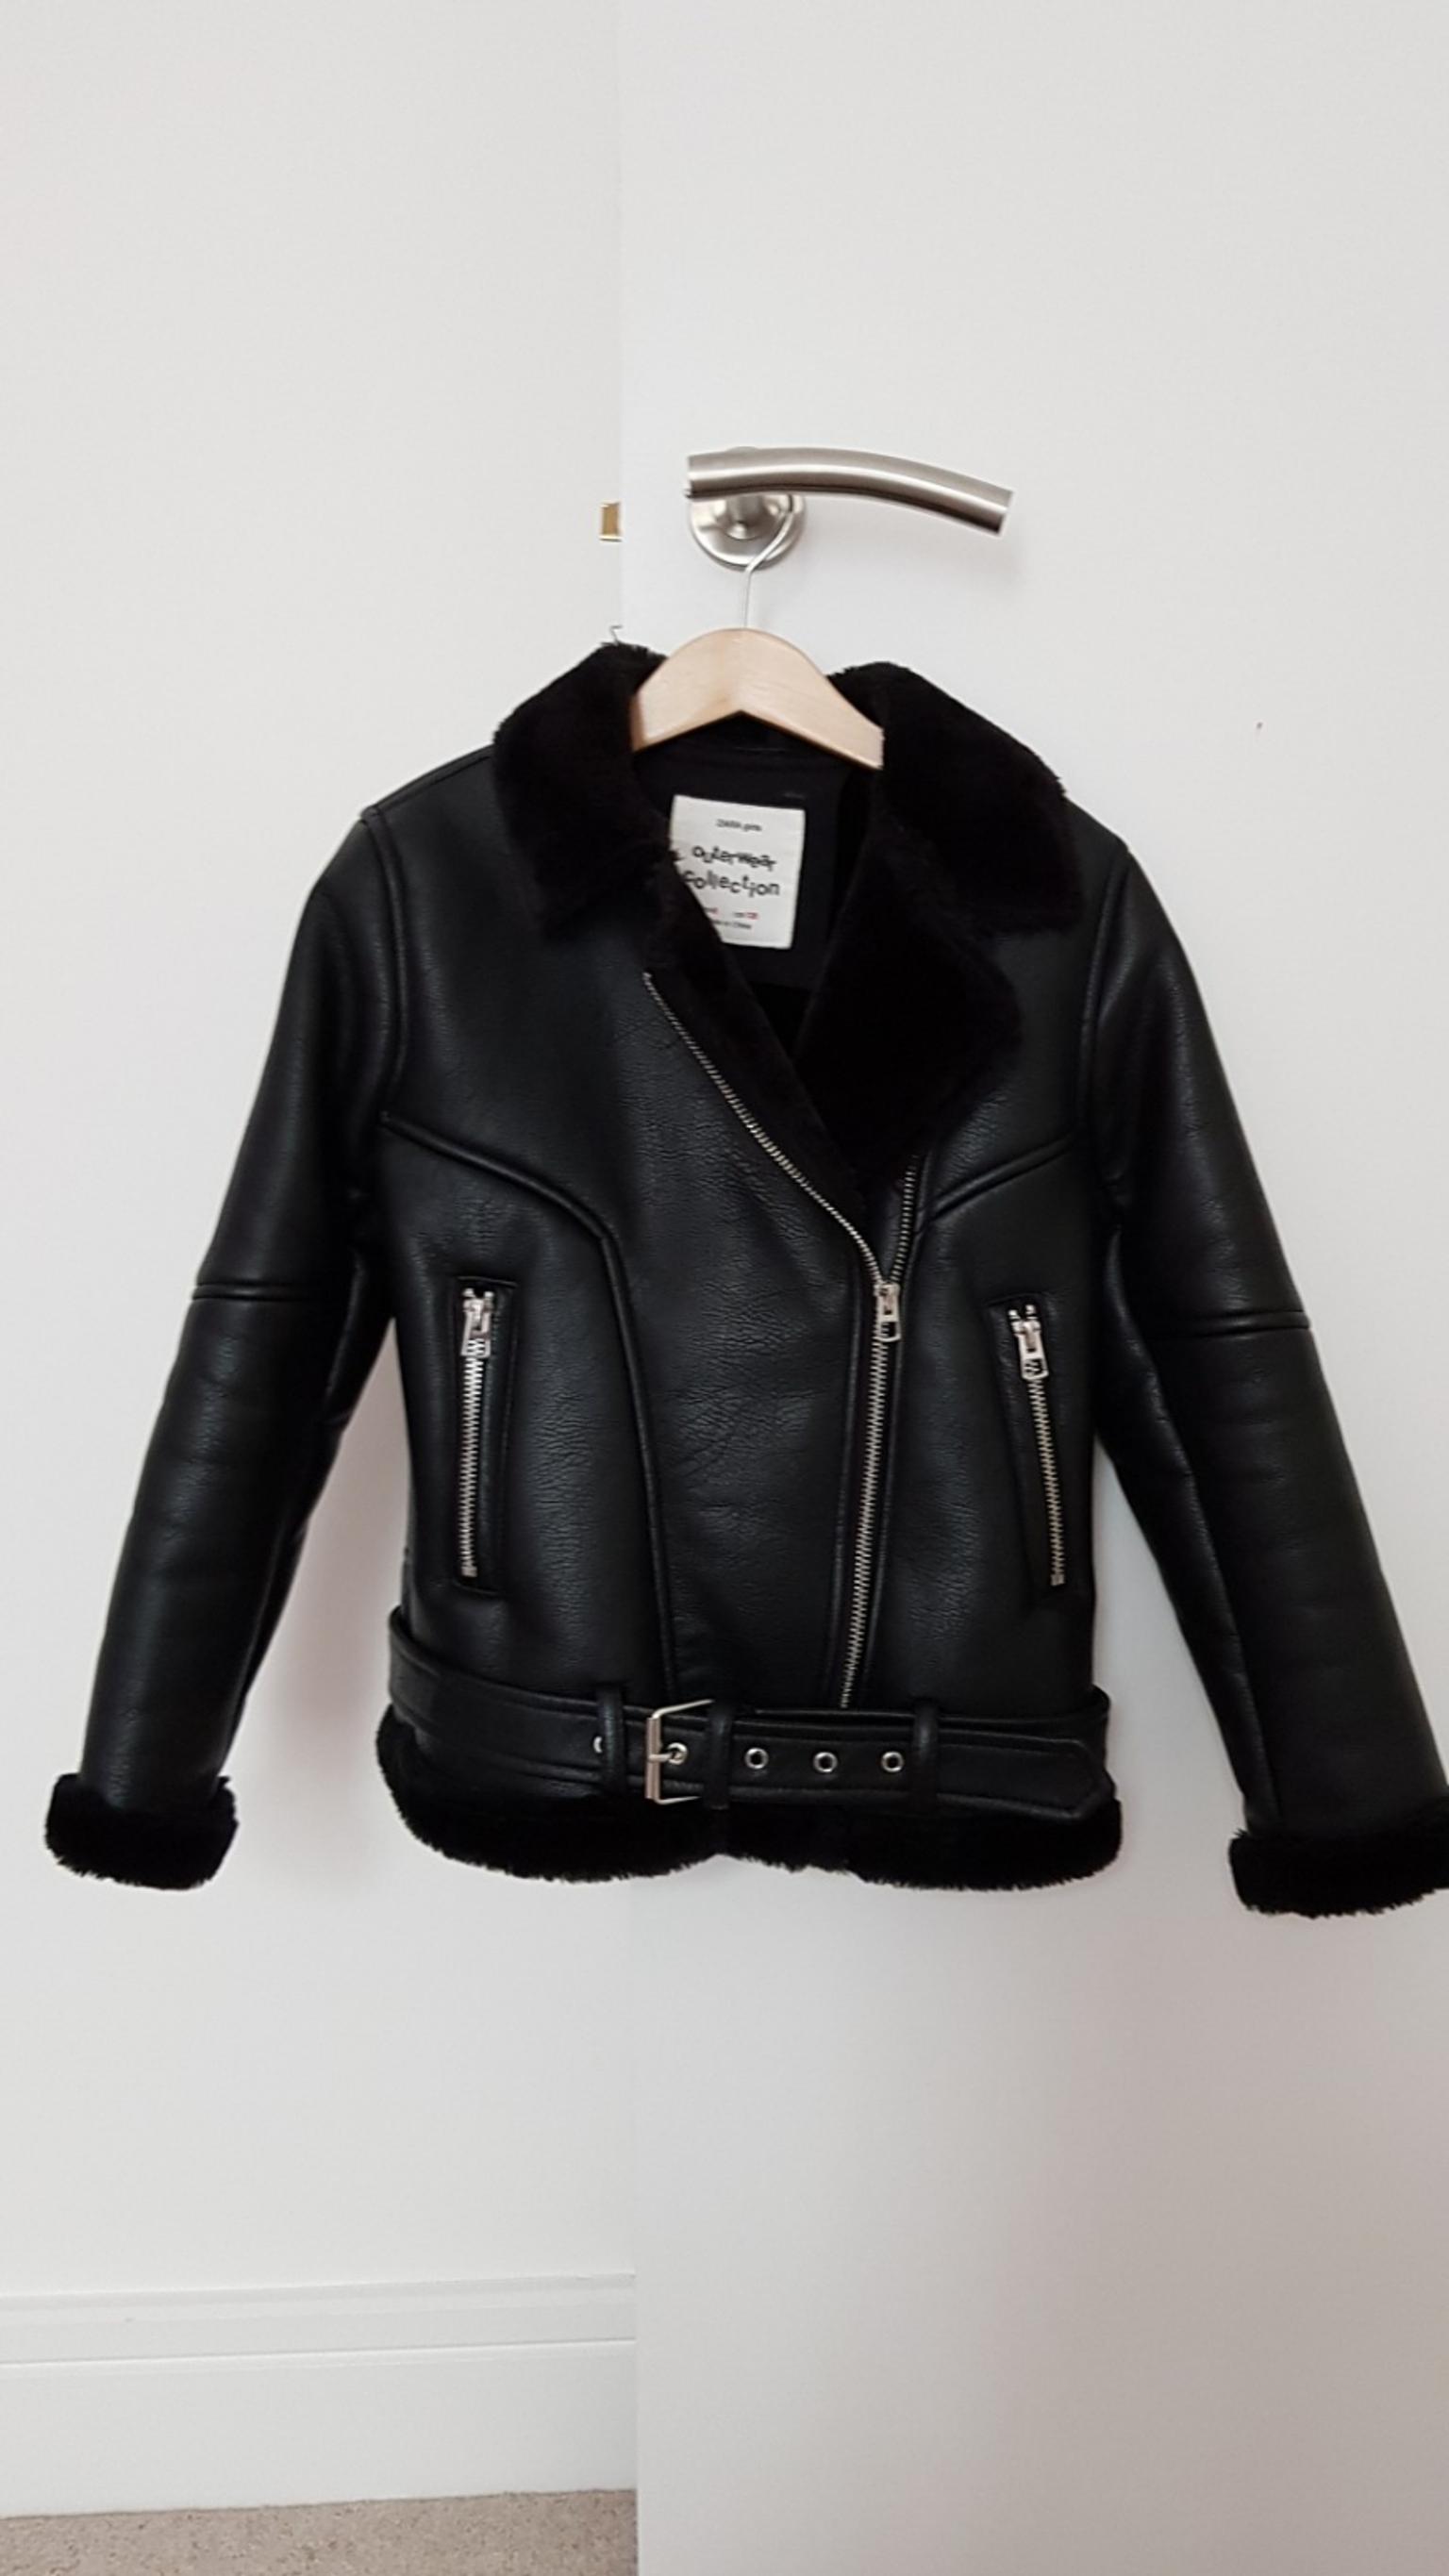 zara leather jacket girls